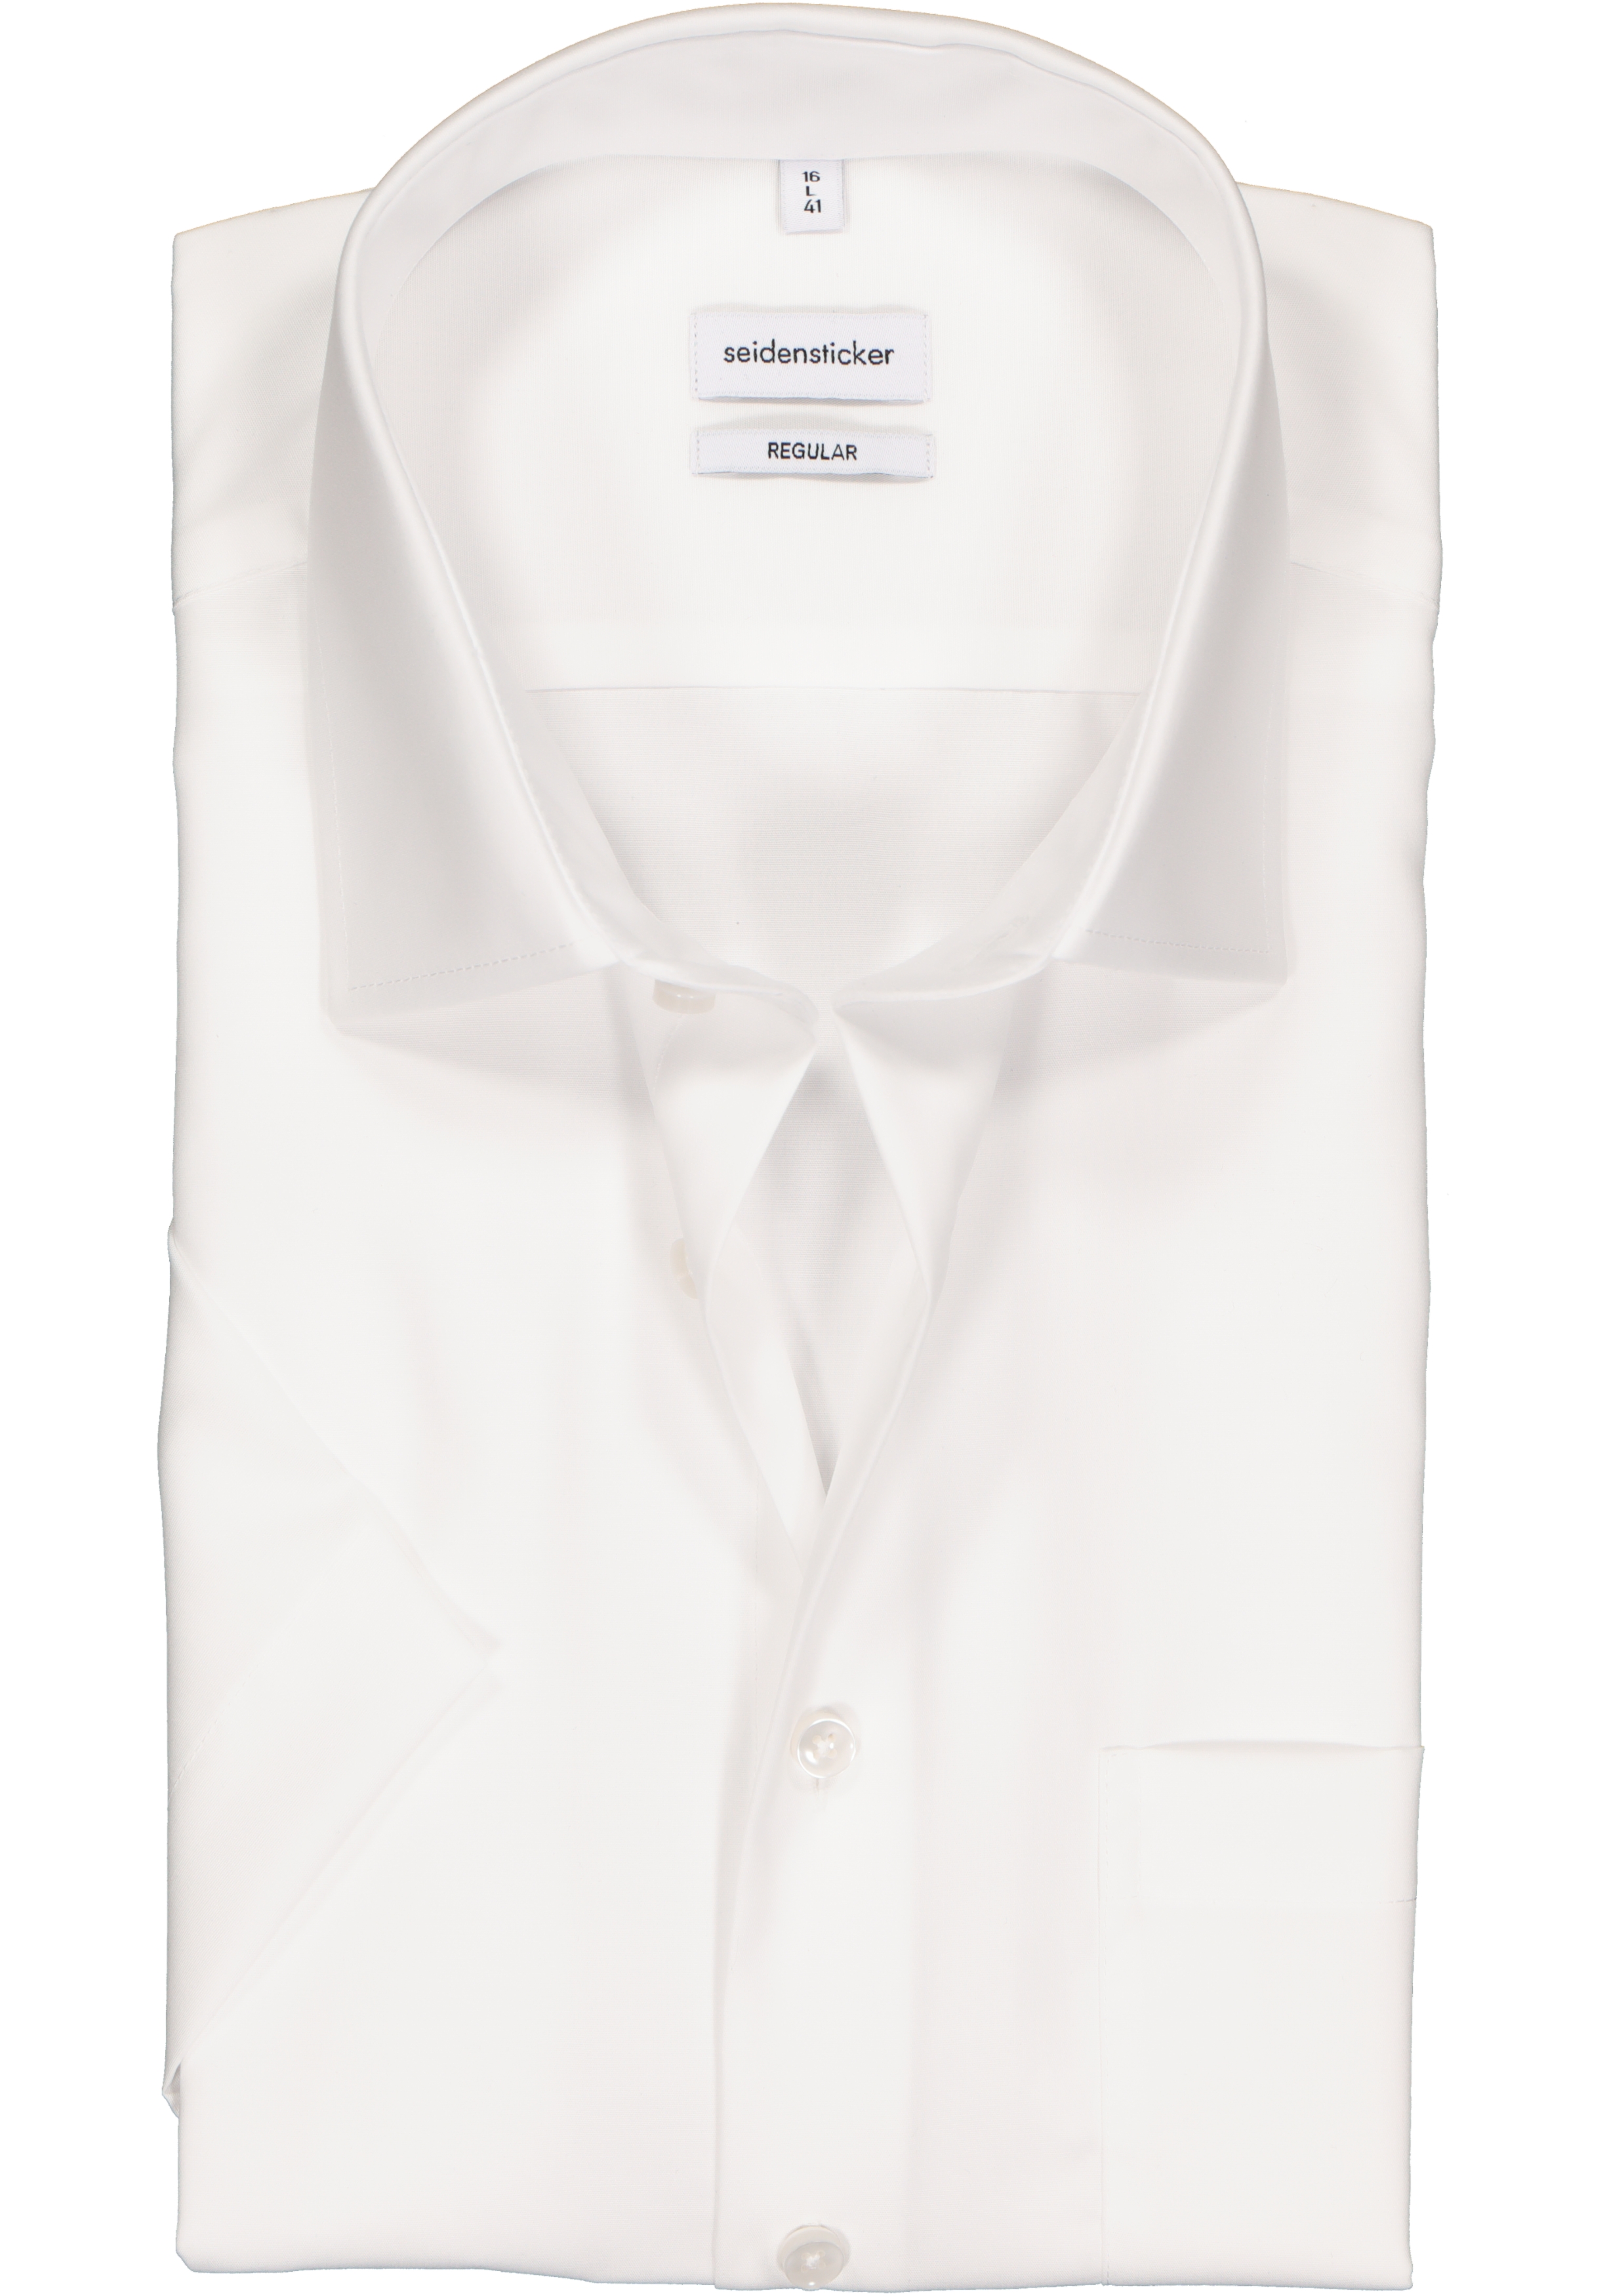 Seidensticker regular fit overhemd, korte mouw, wit 